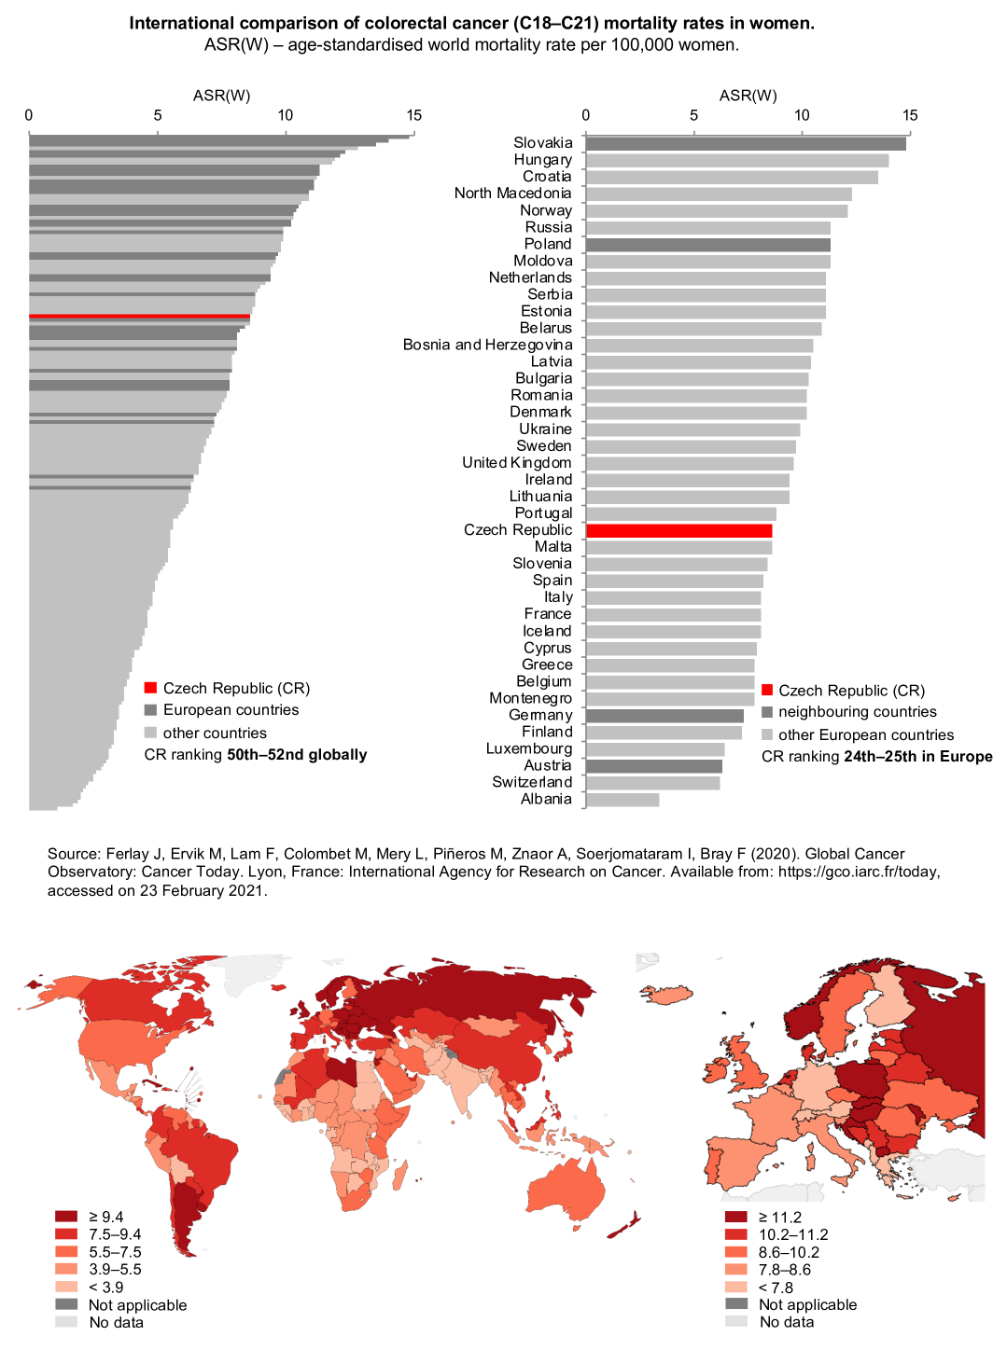 Figure 2c: International comparison of colorectal cancer mortality rates – women. ASR(W) – age-standardized world mortality rate per 100,000 population. Source: GLOBOCAN 2020